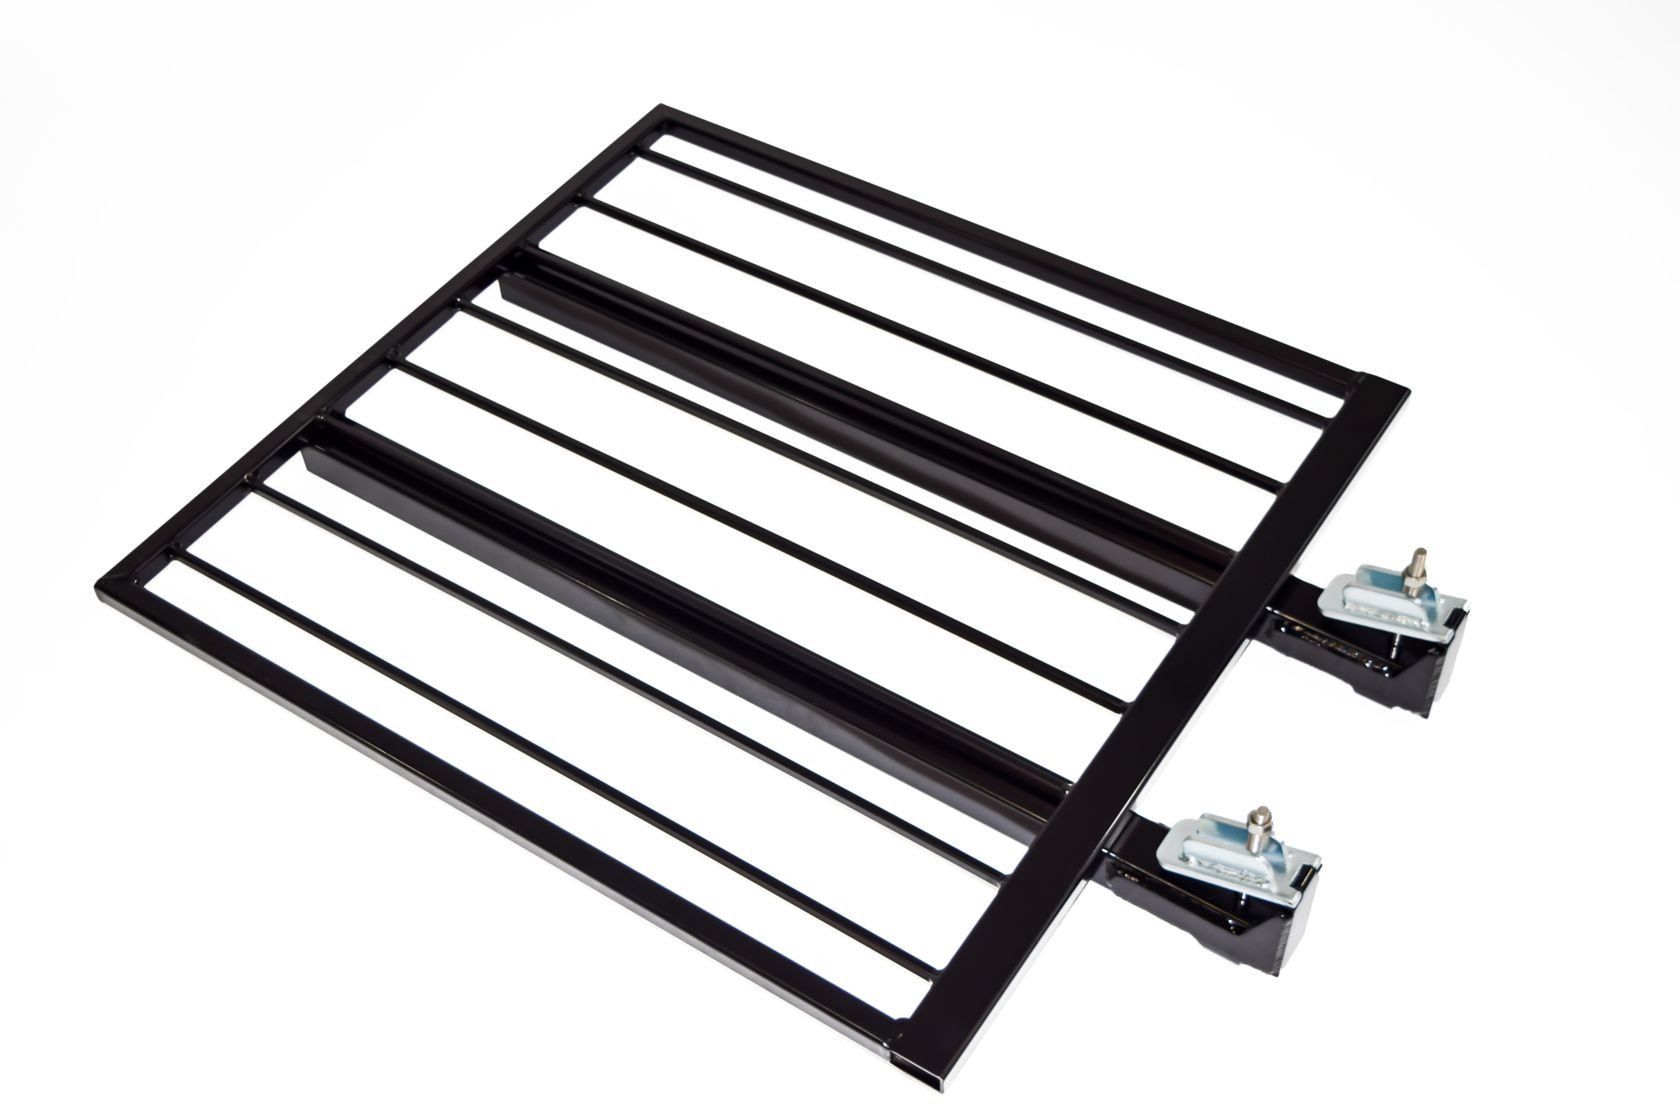 Aluminum Guardrail Frame (Code compliant for public use) Black Finish 3'x36